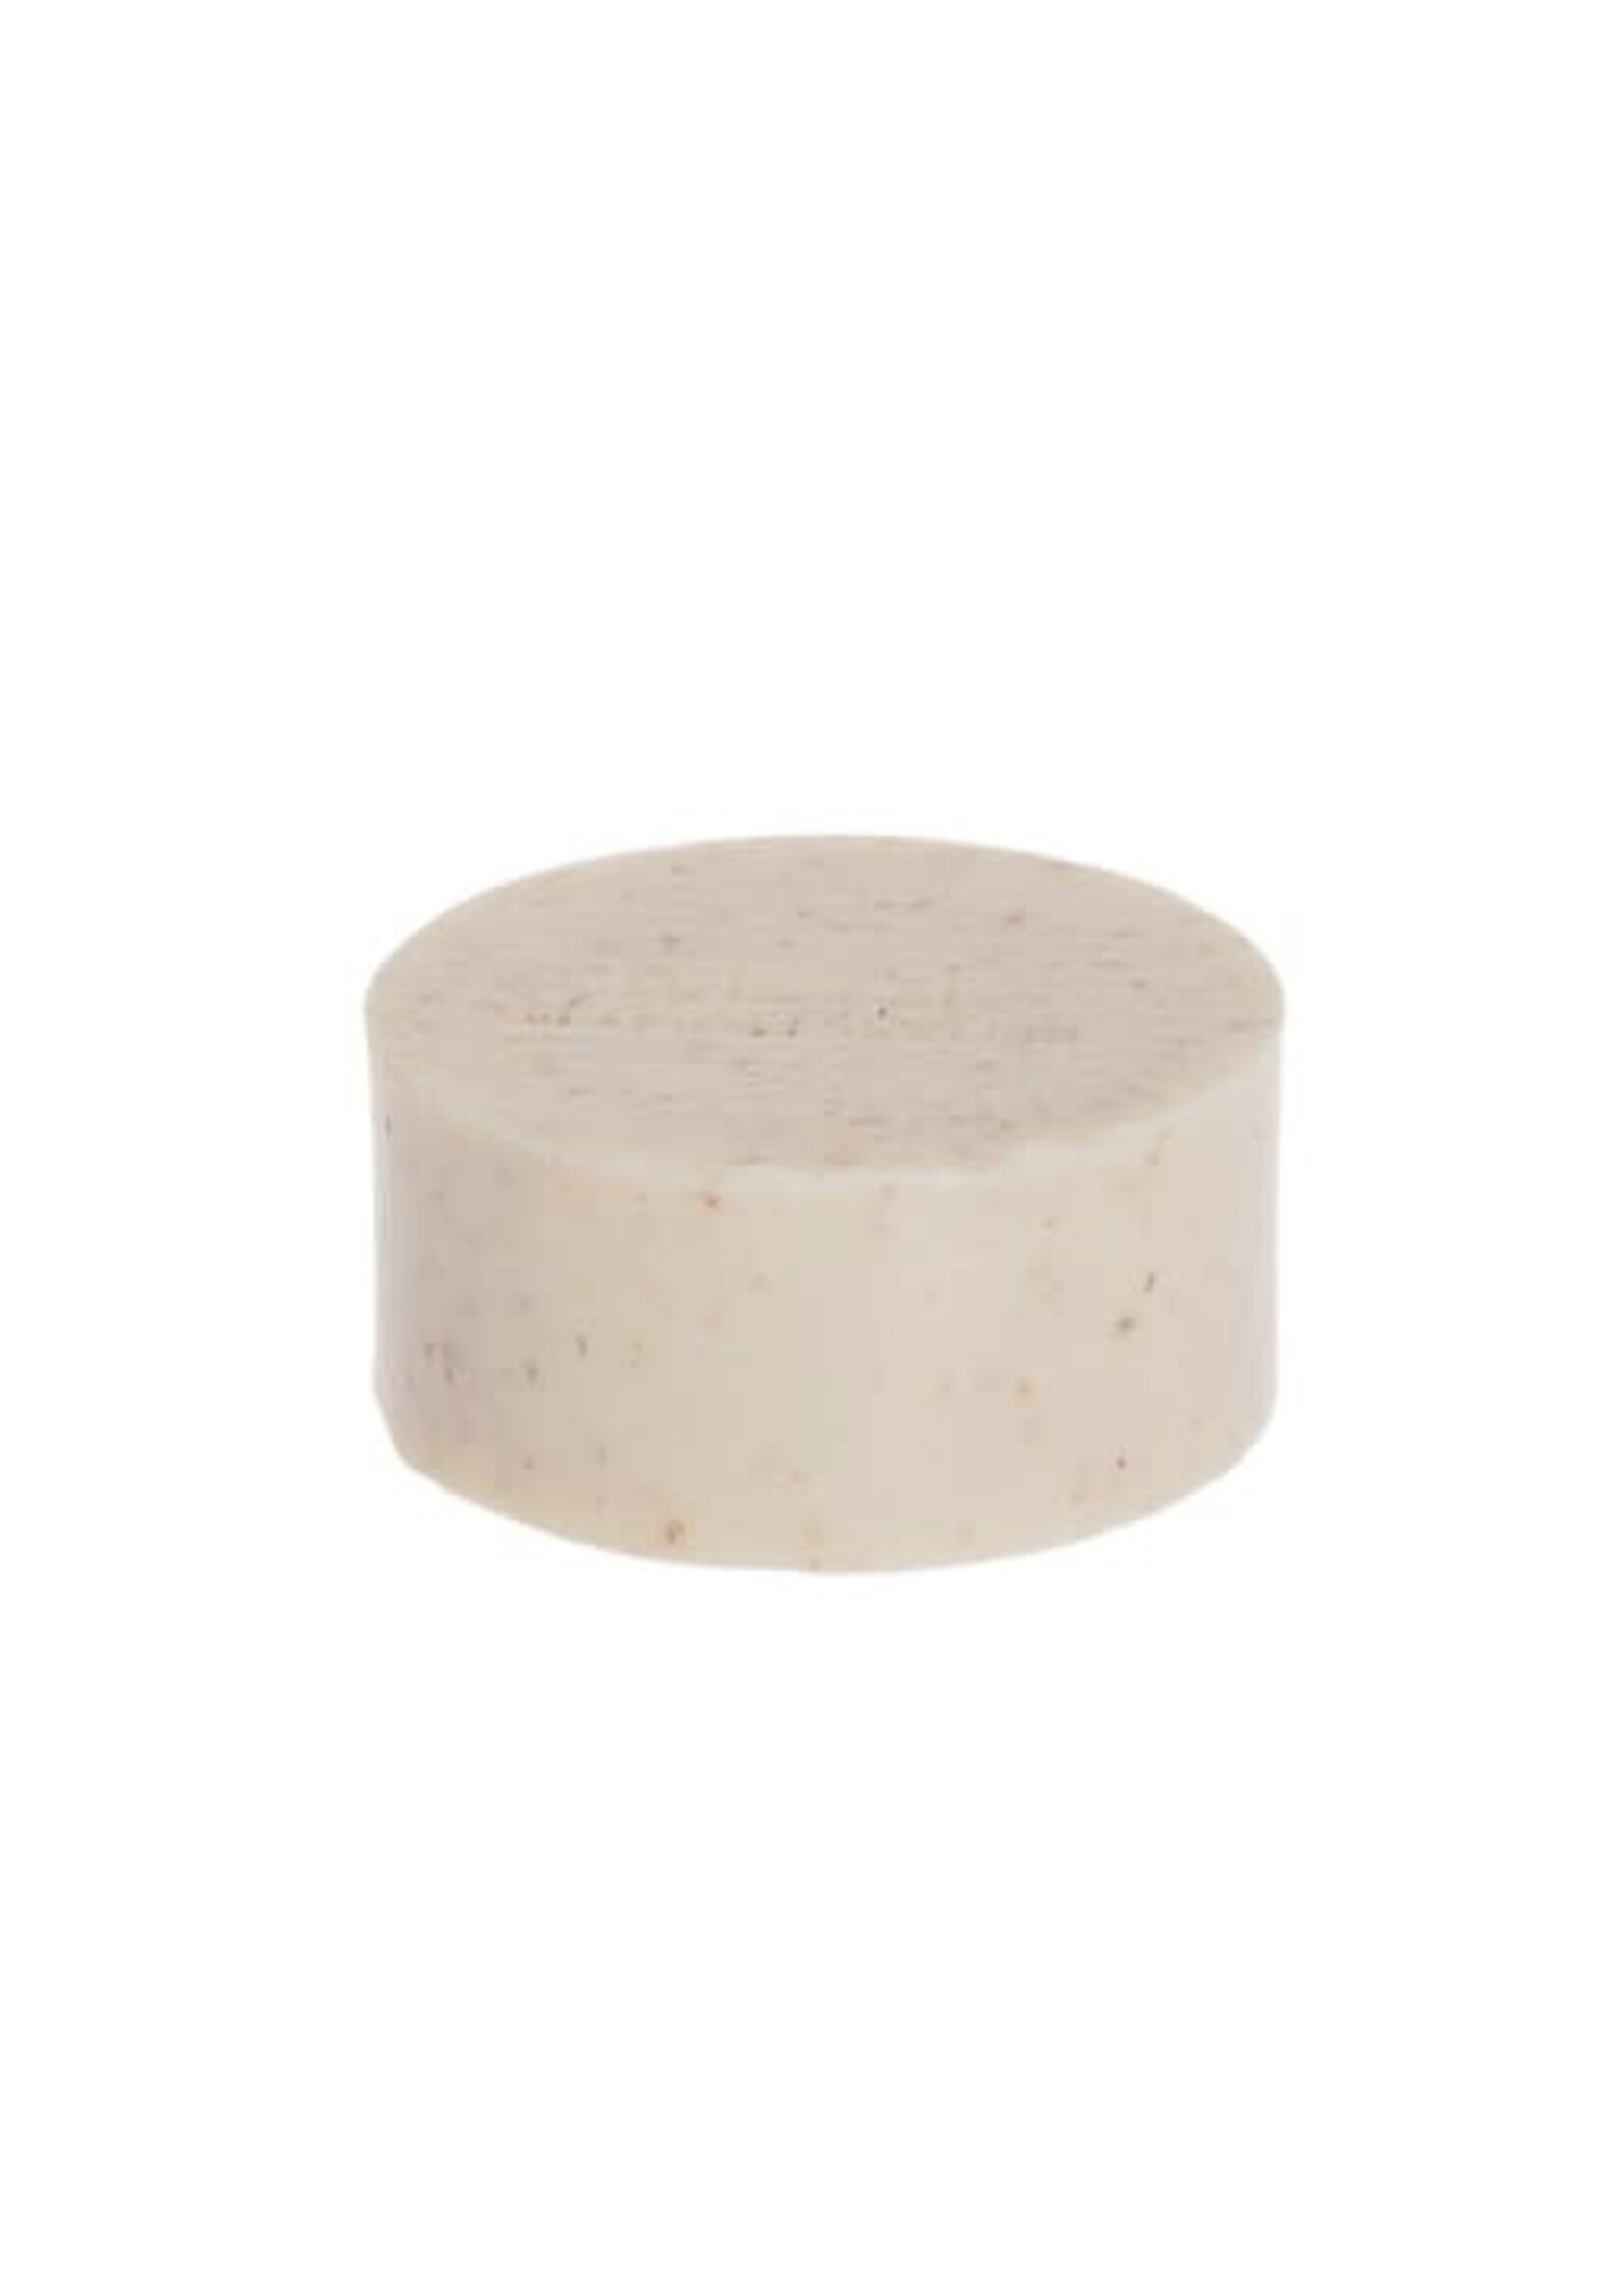 Soap Round - Almond Scrub